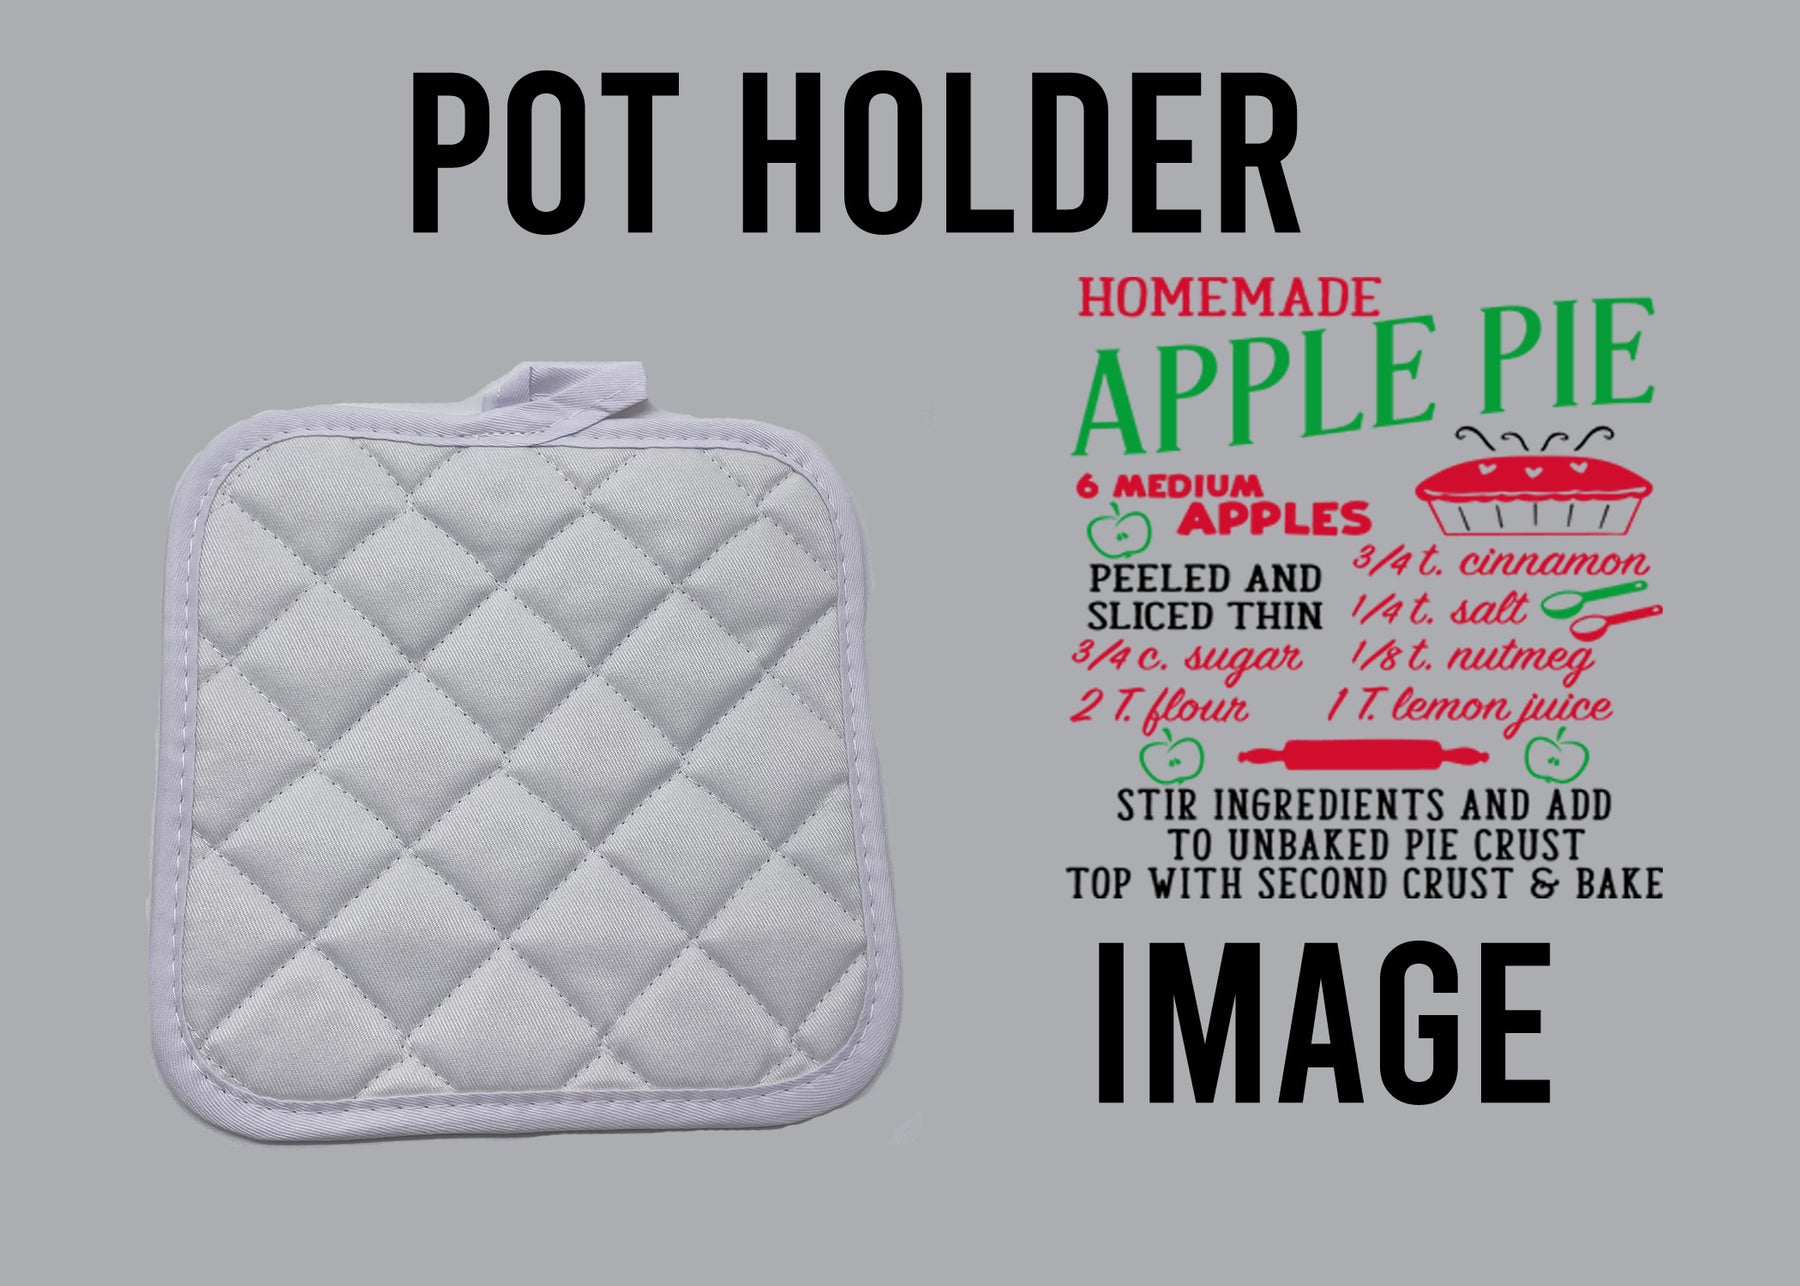 Apple Pie Recipe Pot Holder